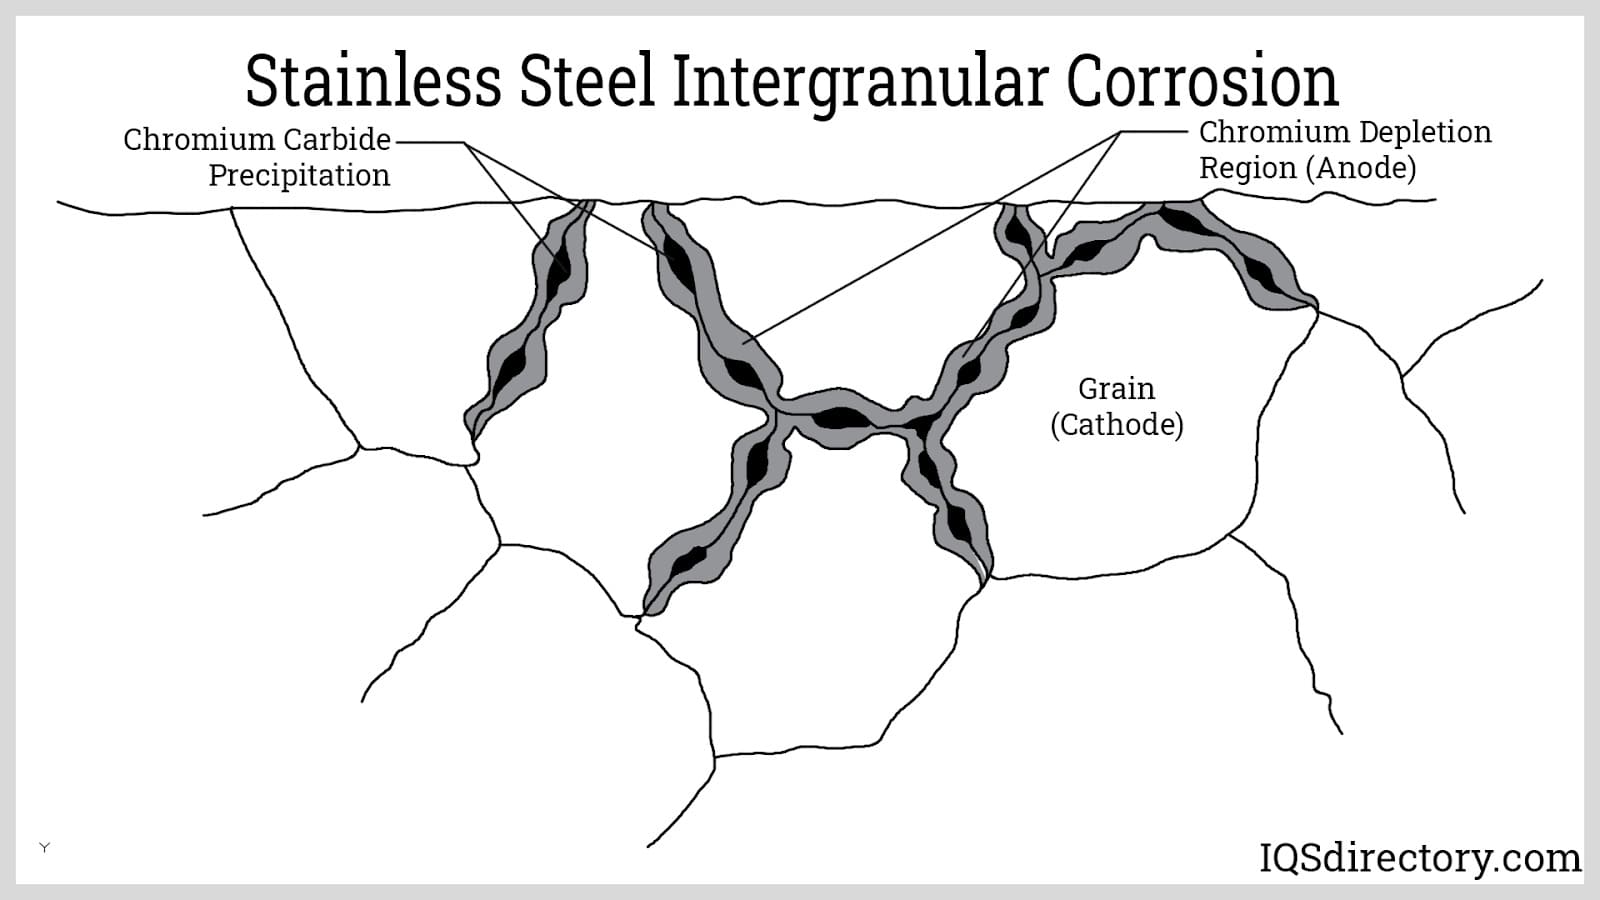 Stainless Steel Intergranular Corrosion